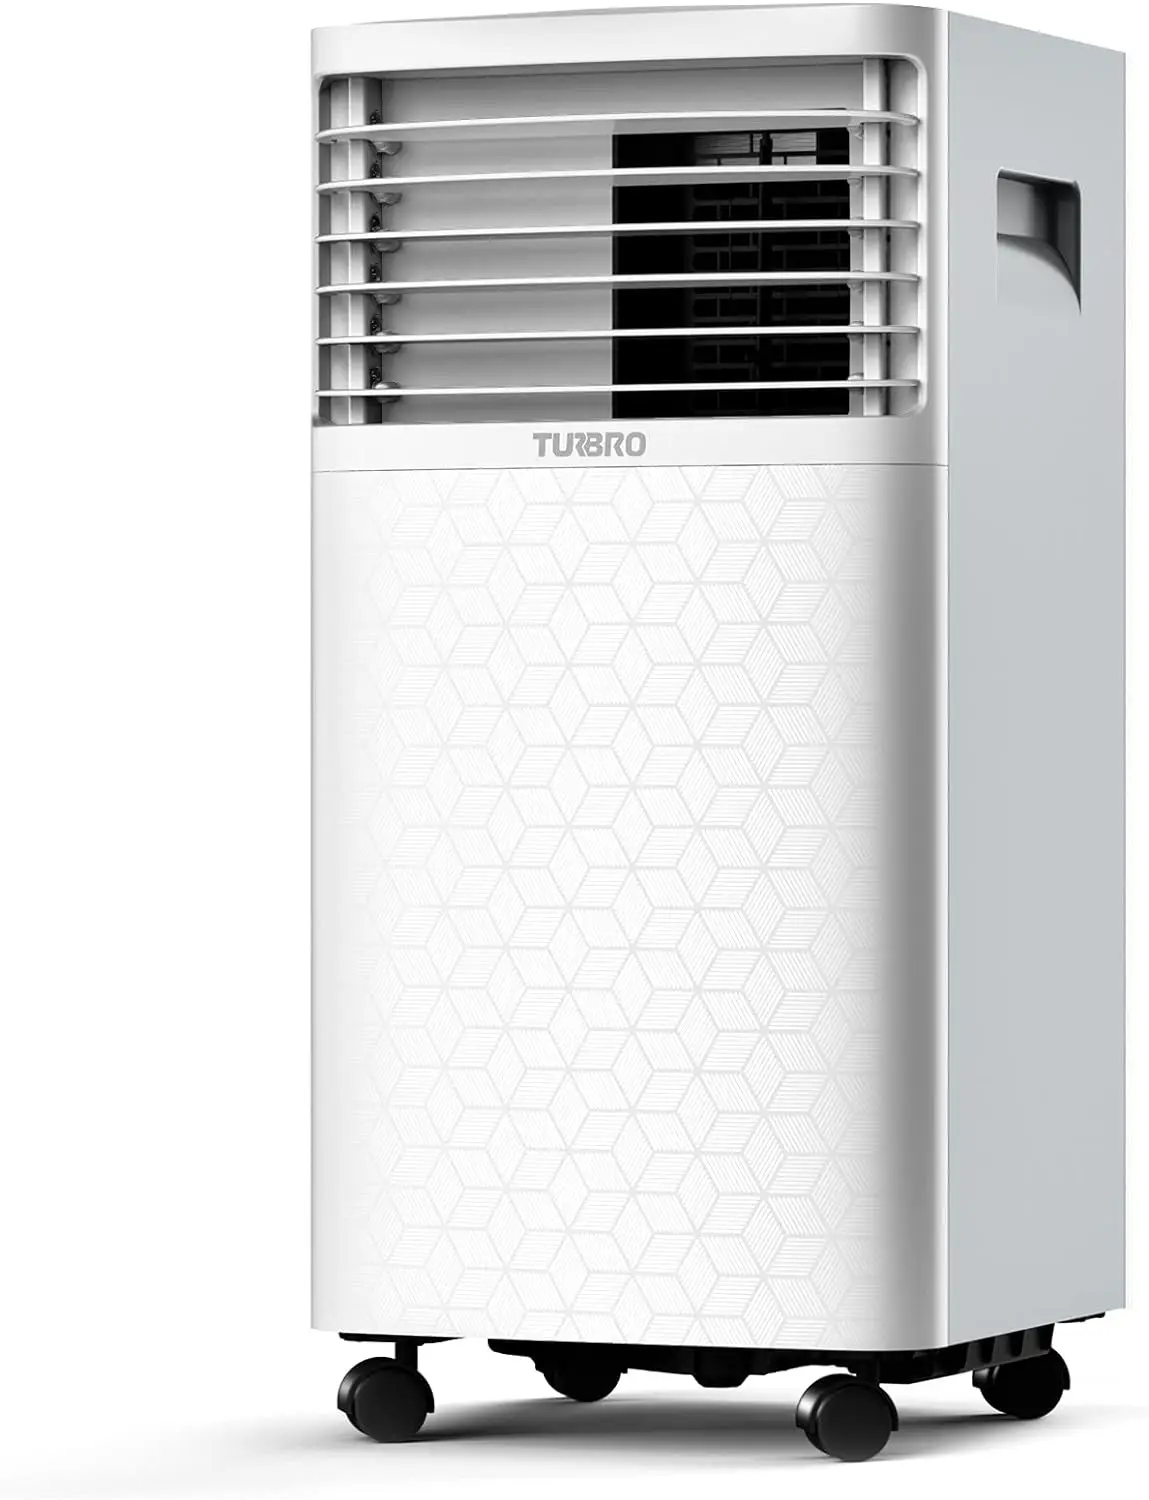 

TURBRO Greenland 10,000 BTU ASHRAE (6,000 BTU SACC) Portable Air Conditioner, Dehumidifier and Fan, 3-in-1 Floor AC Unit